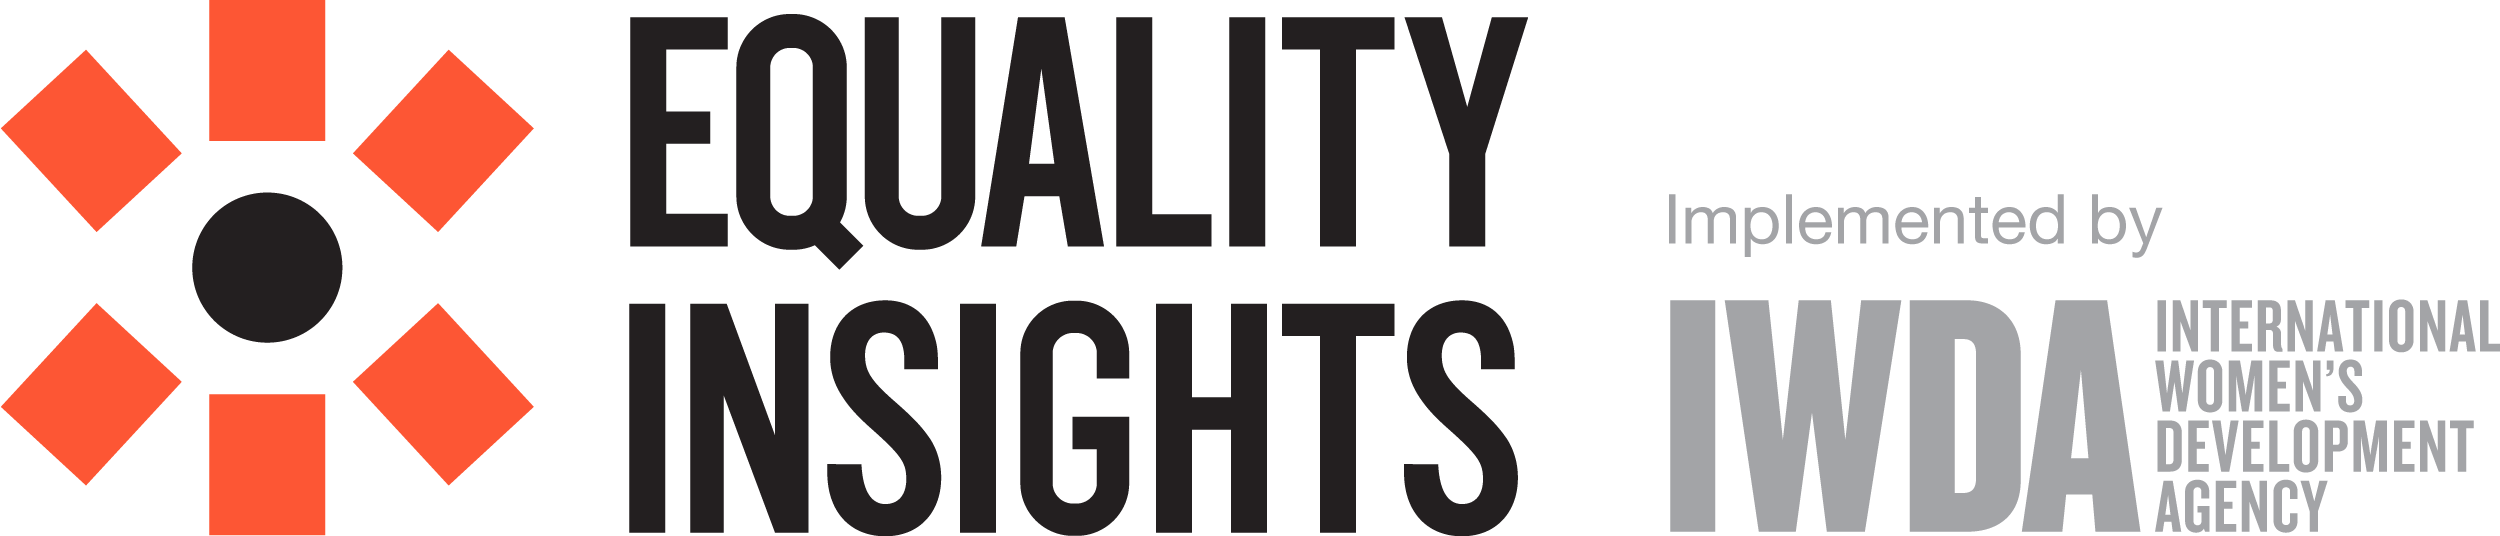 Logo: Equality Insights, Implemented by IWDA (International Women's Development Agency)